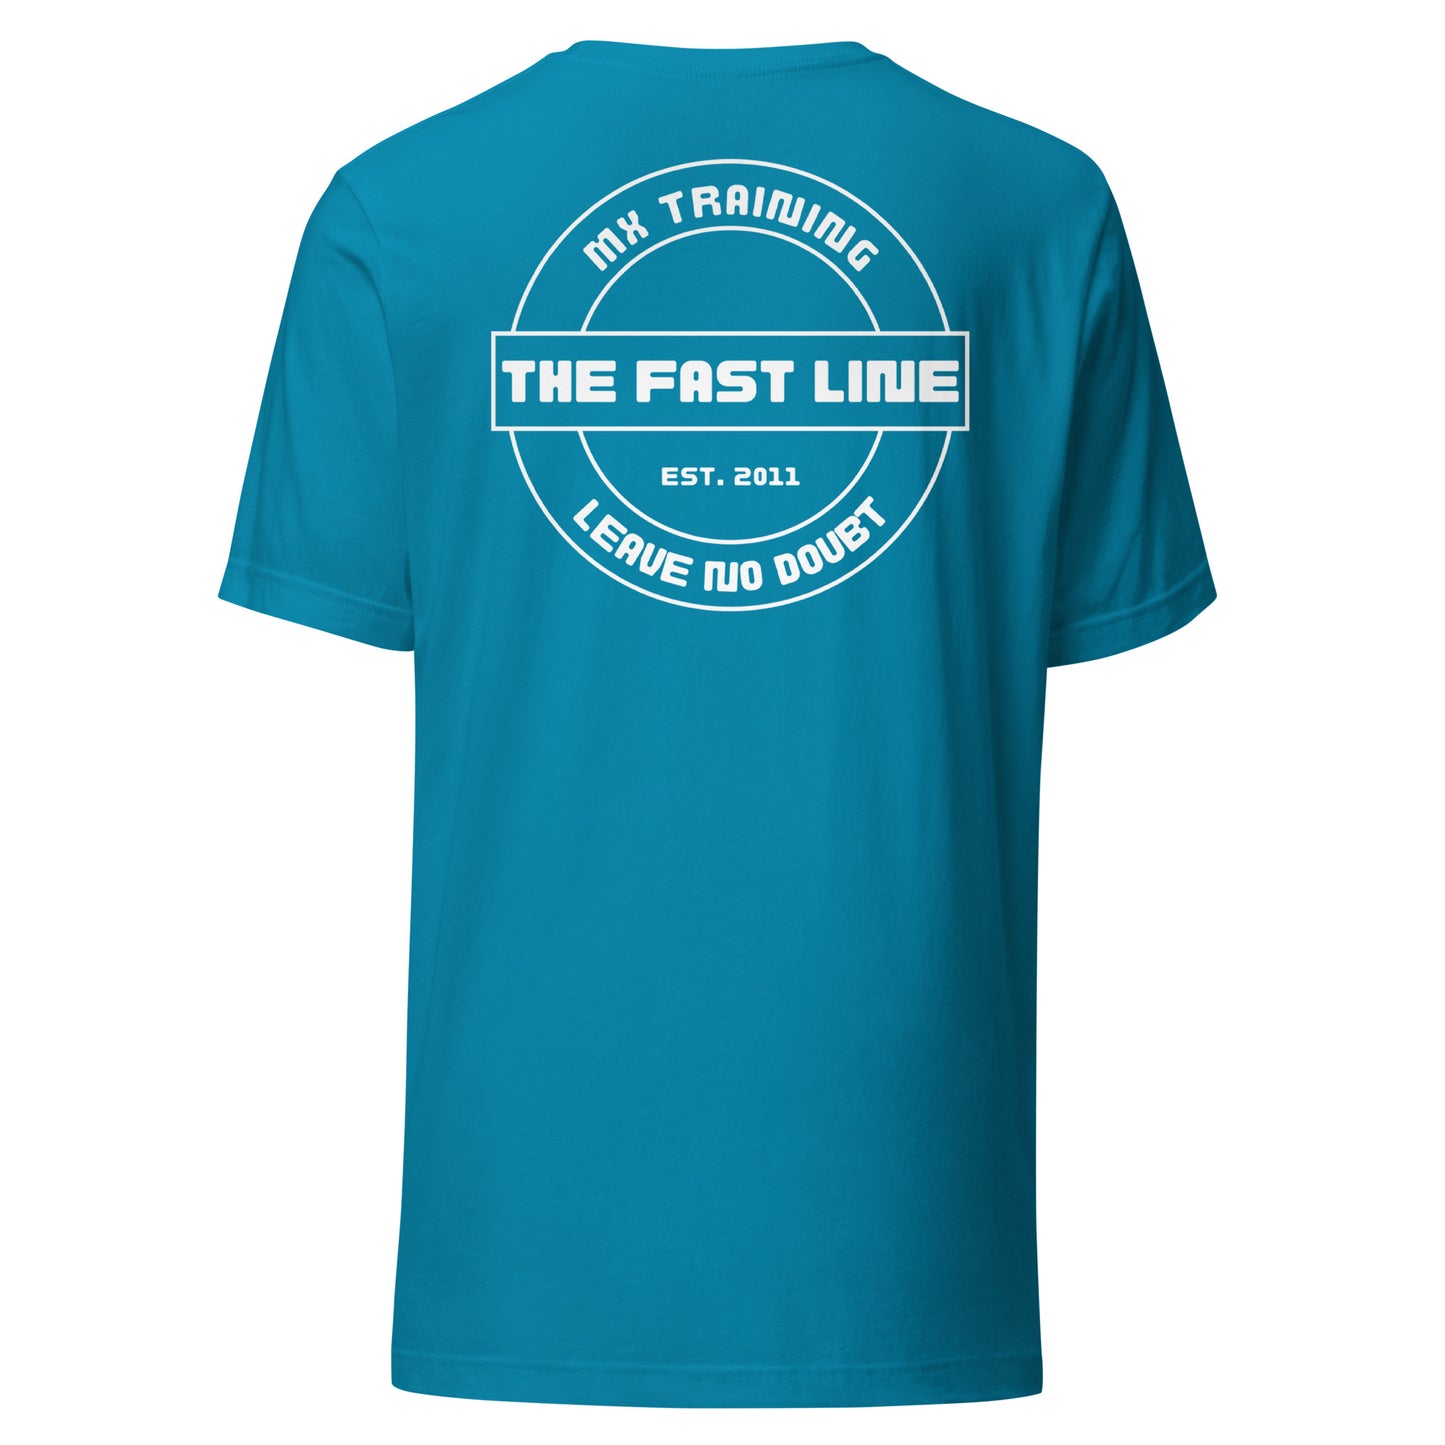 The Fast Line Unisex T-Shirt